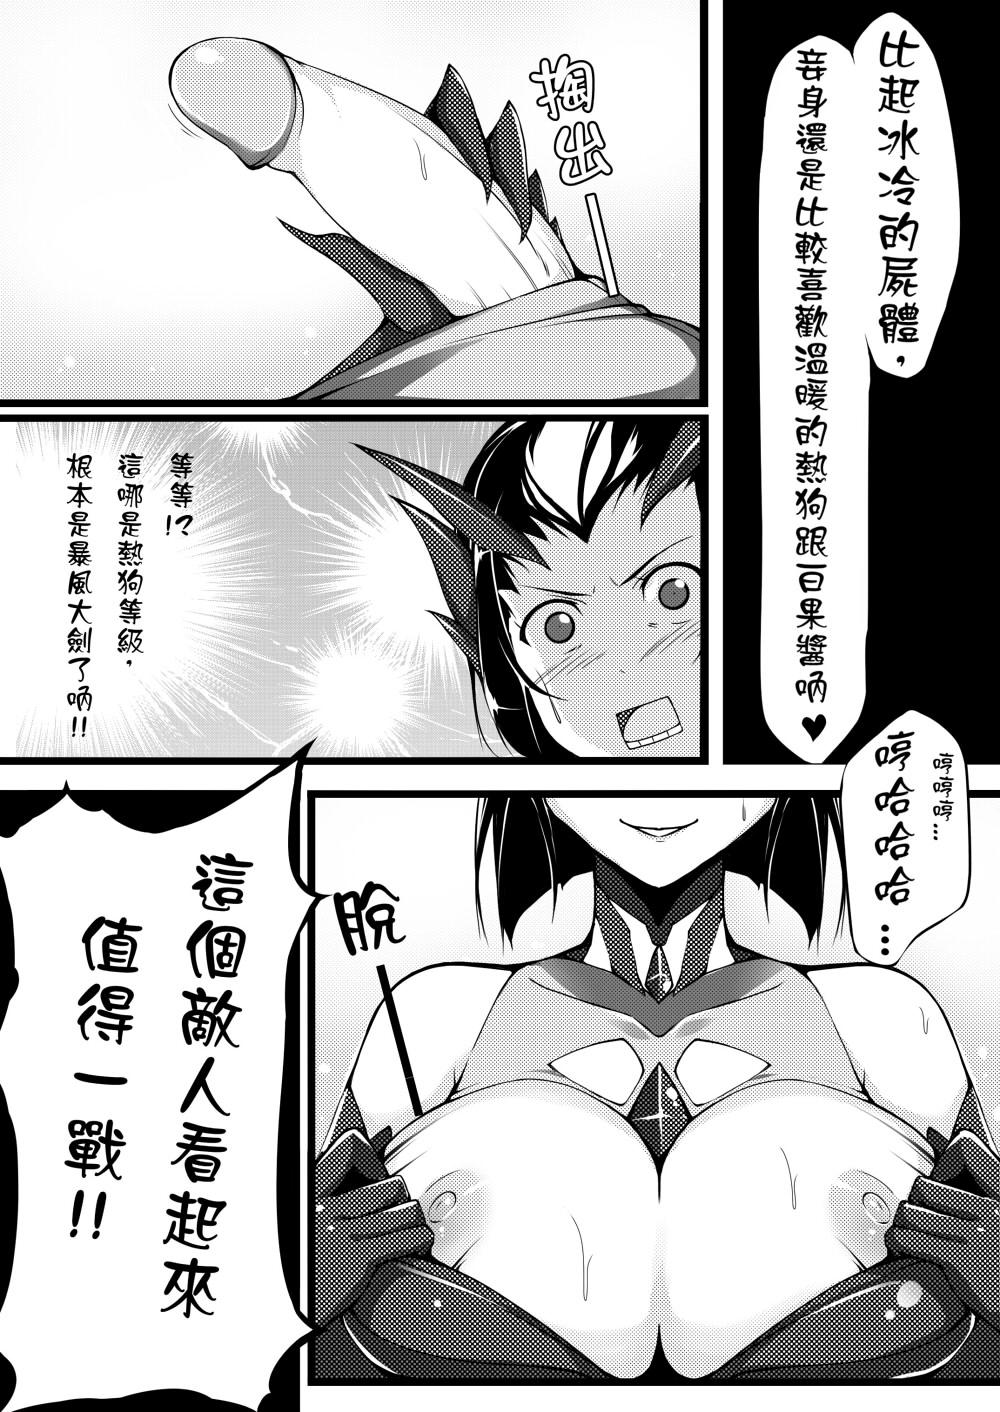 Ftvgirls 蜘蛛王女-Darkness - League of legends Piroca - Page 4